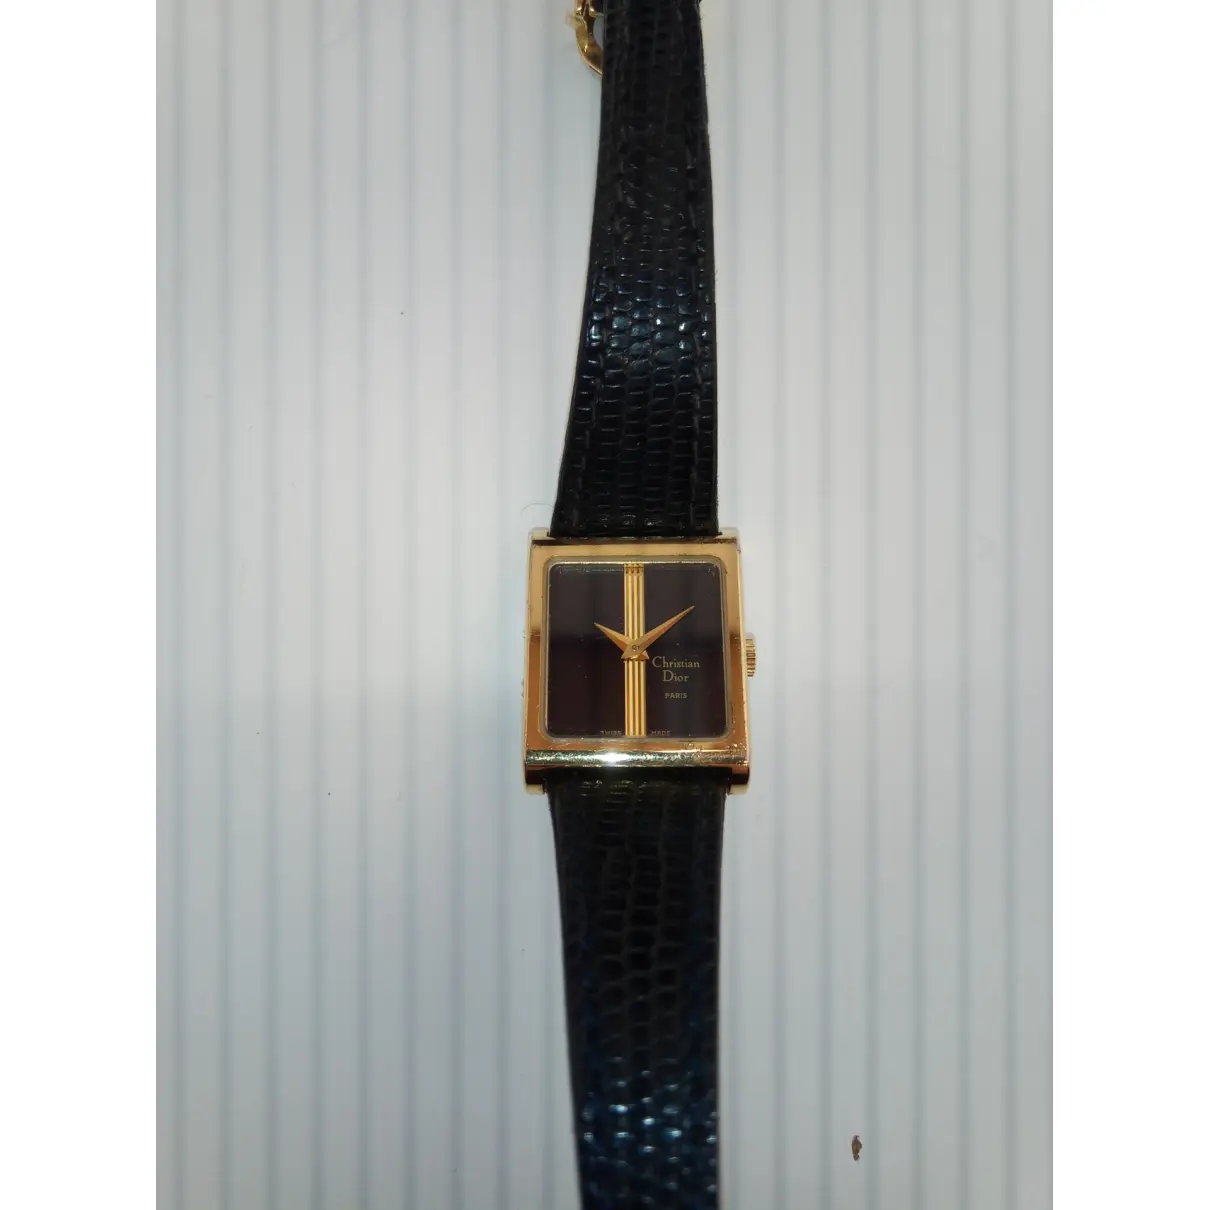 Buy Christian Dior Watch online - Vintage